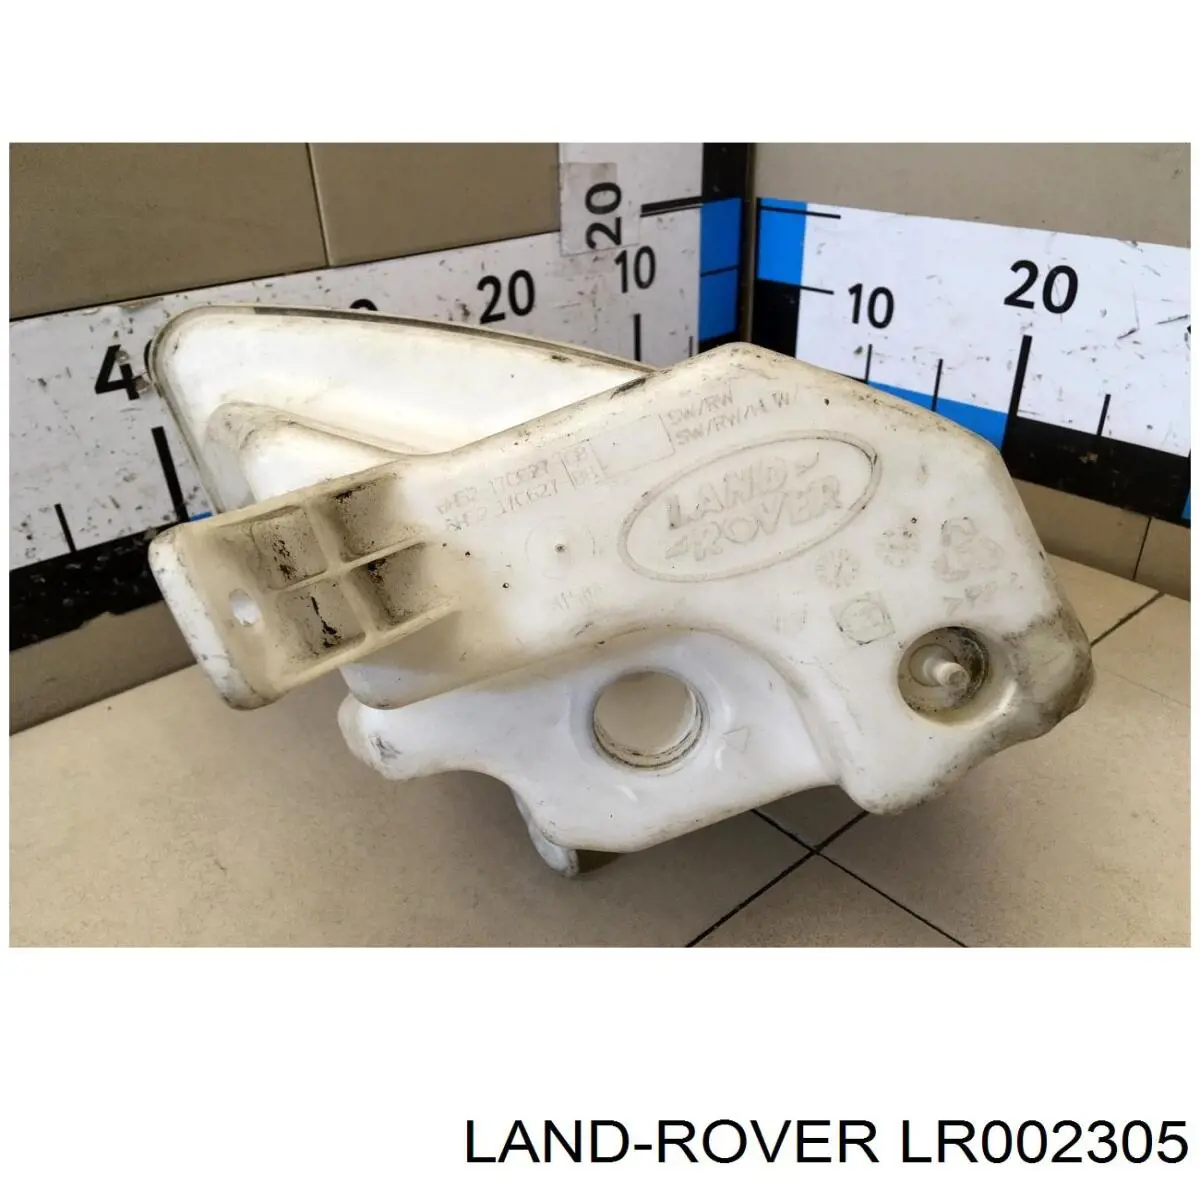 LR002305 Land Rover tanque de fluido para lavador de vidro